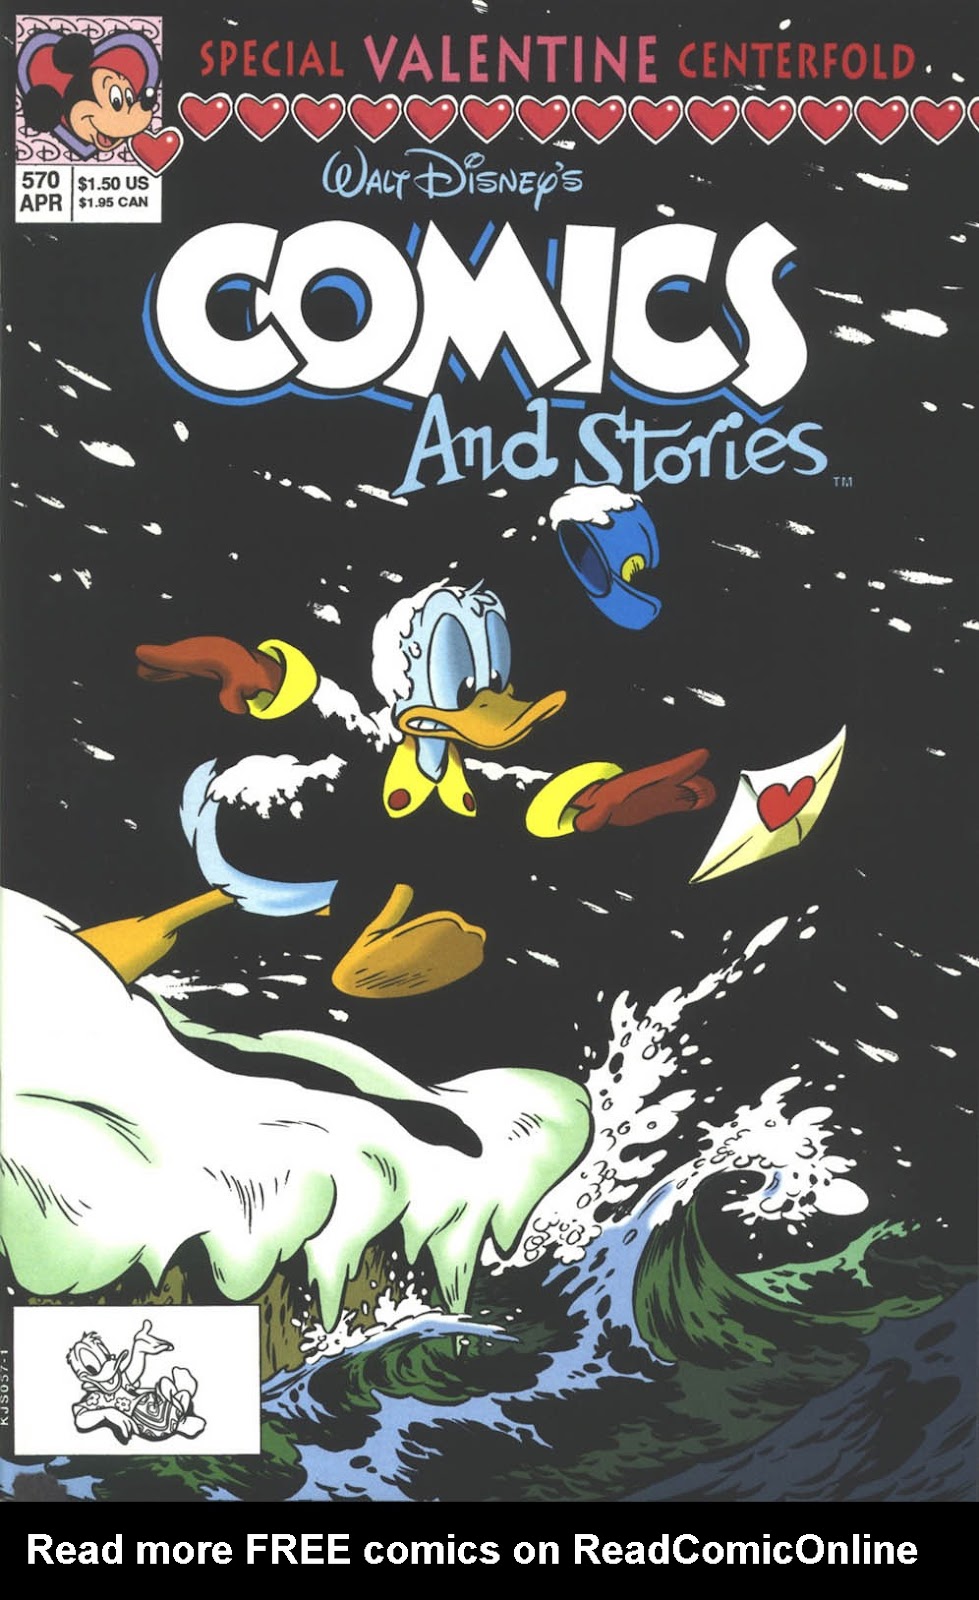 Walt Disneys Comics and Stories 570 Page 1